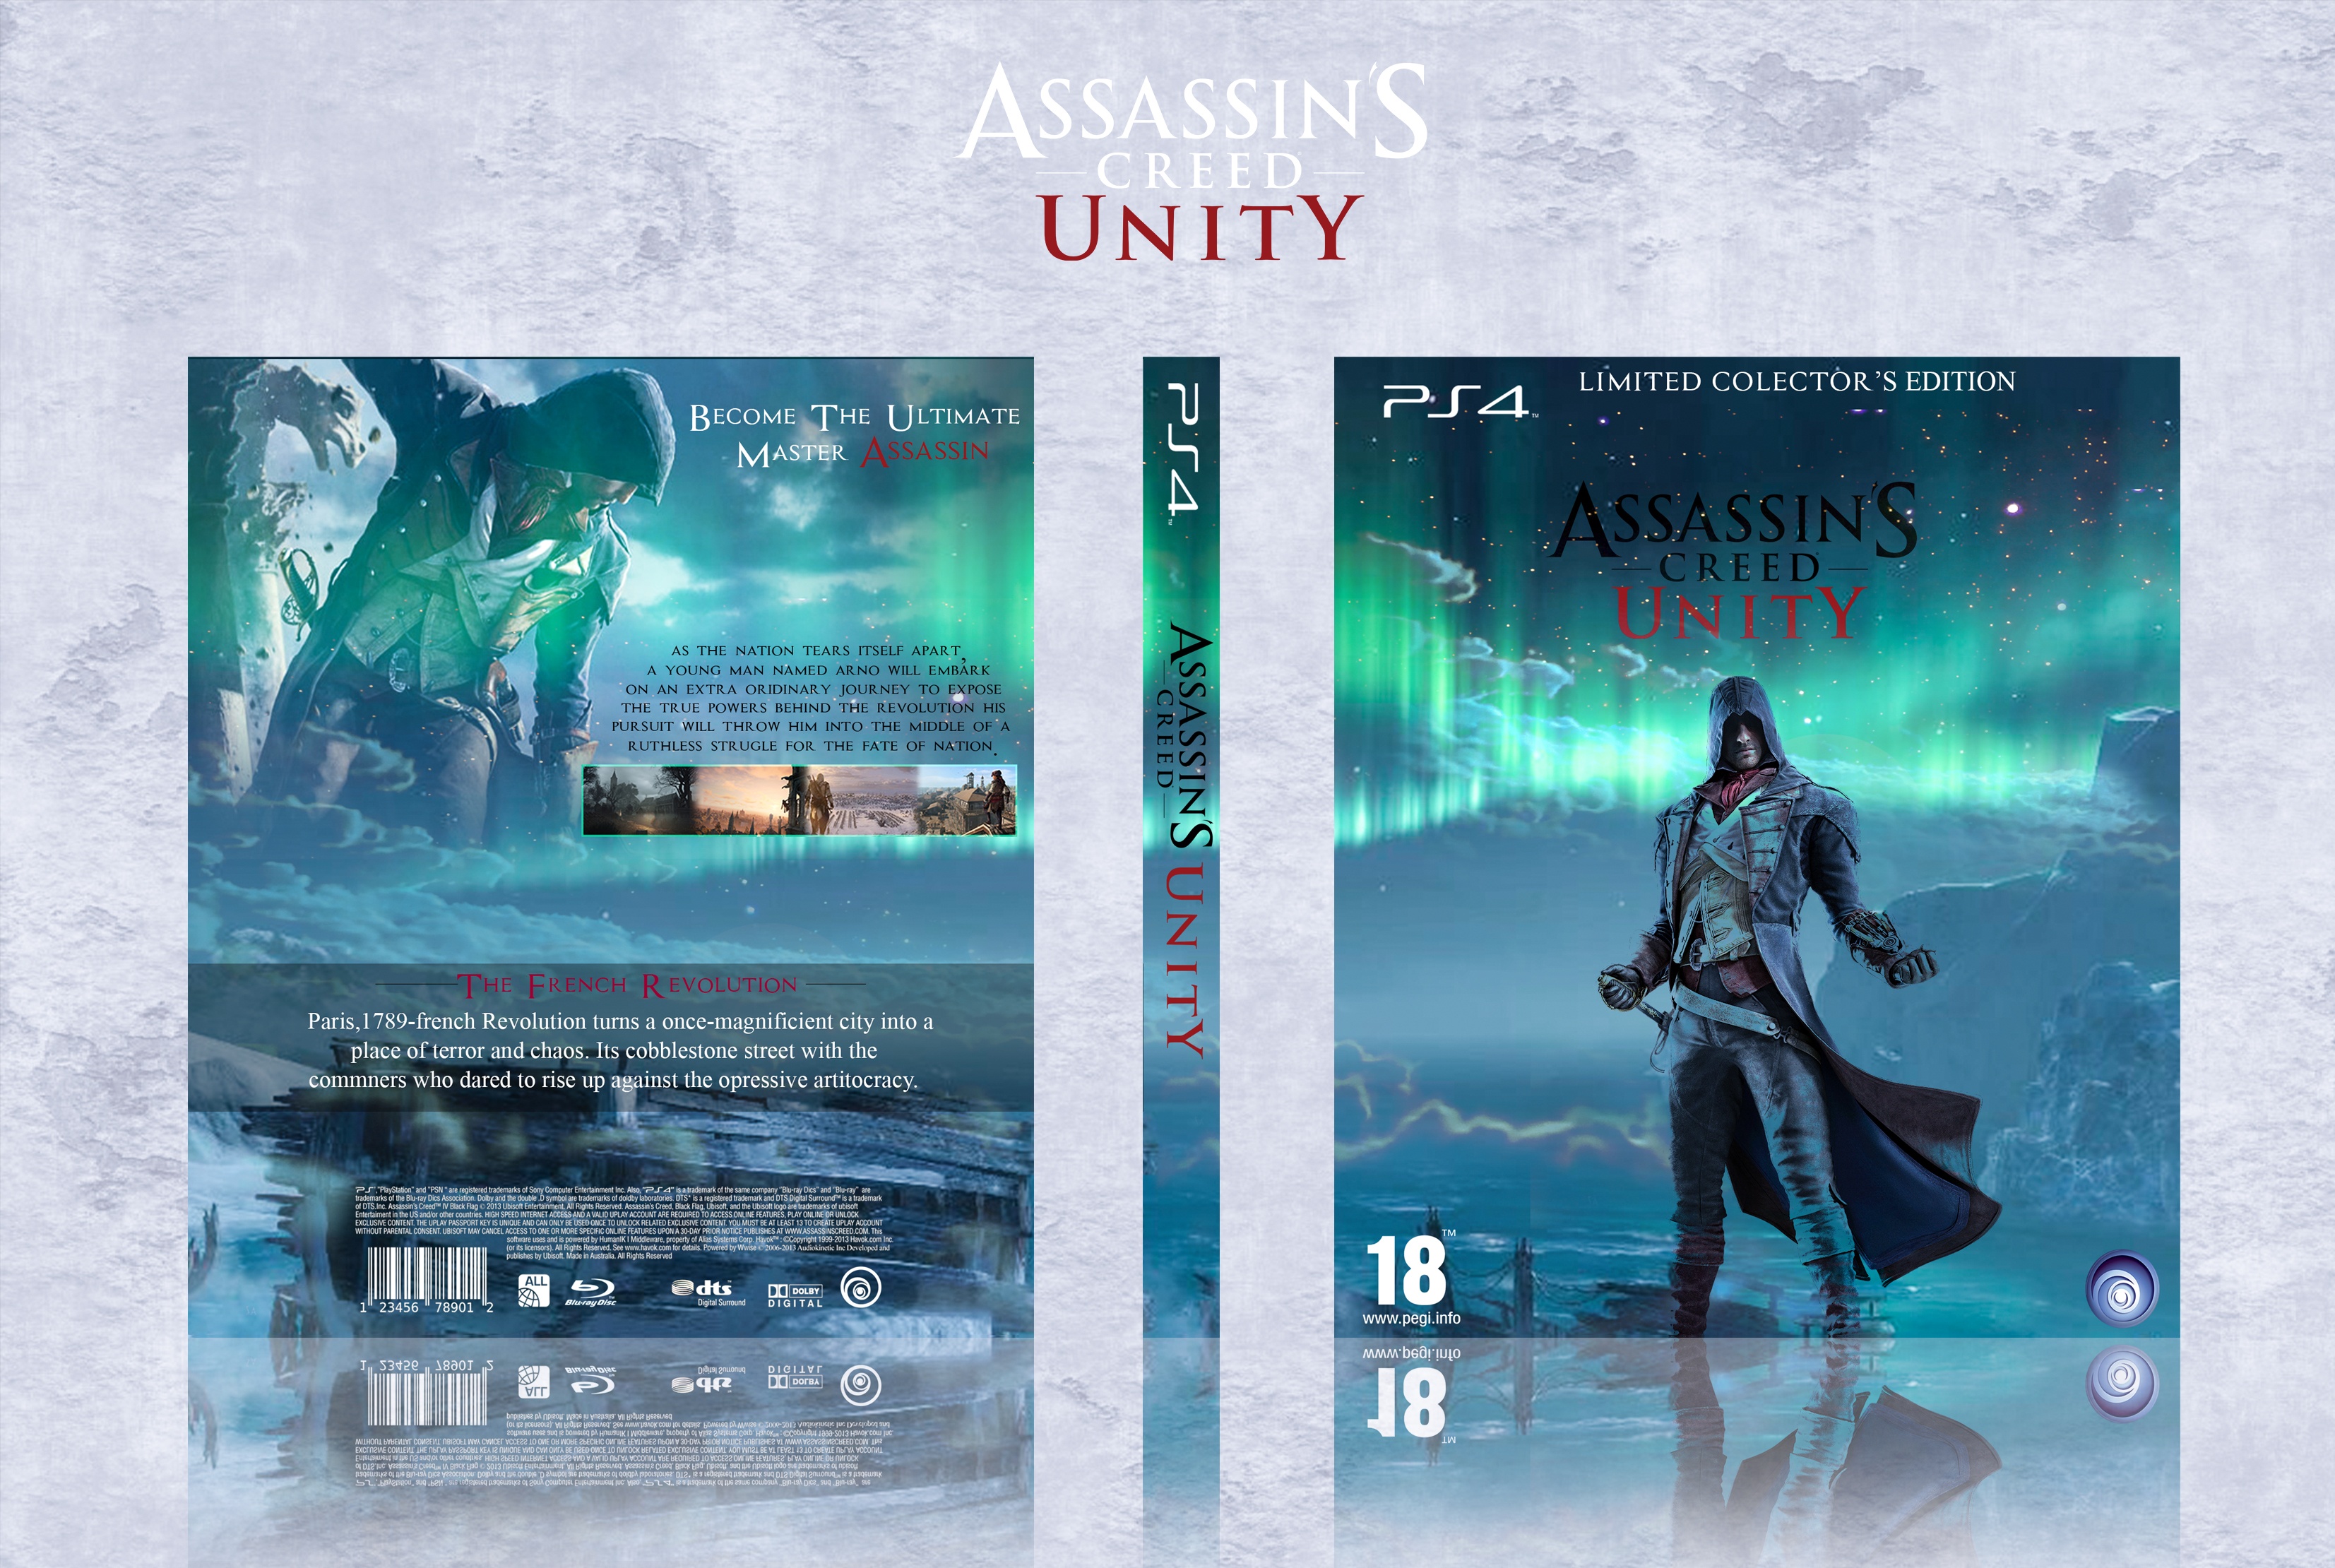 Assassian's Creed unity box cover